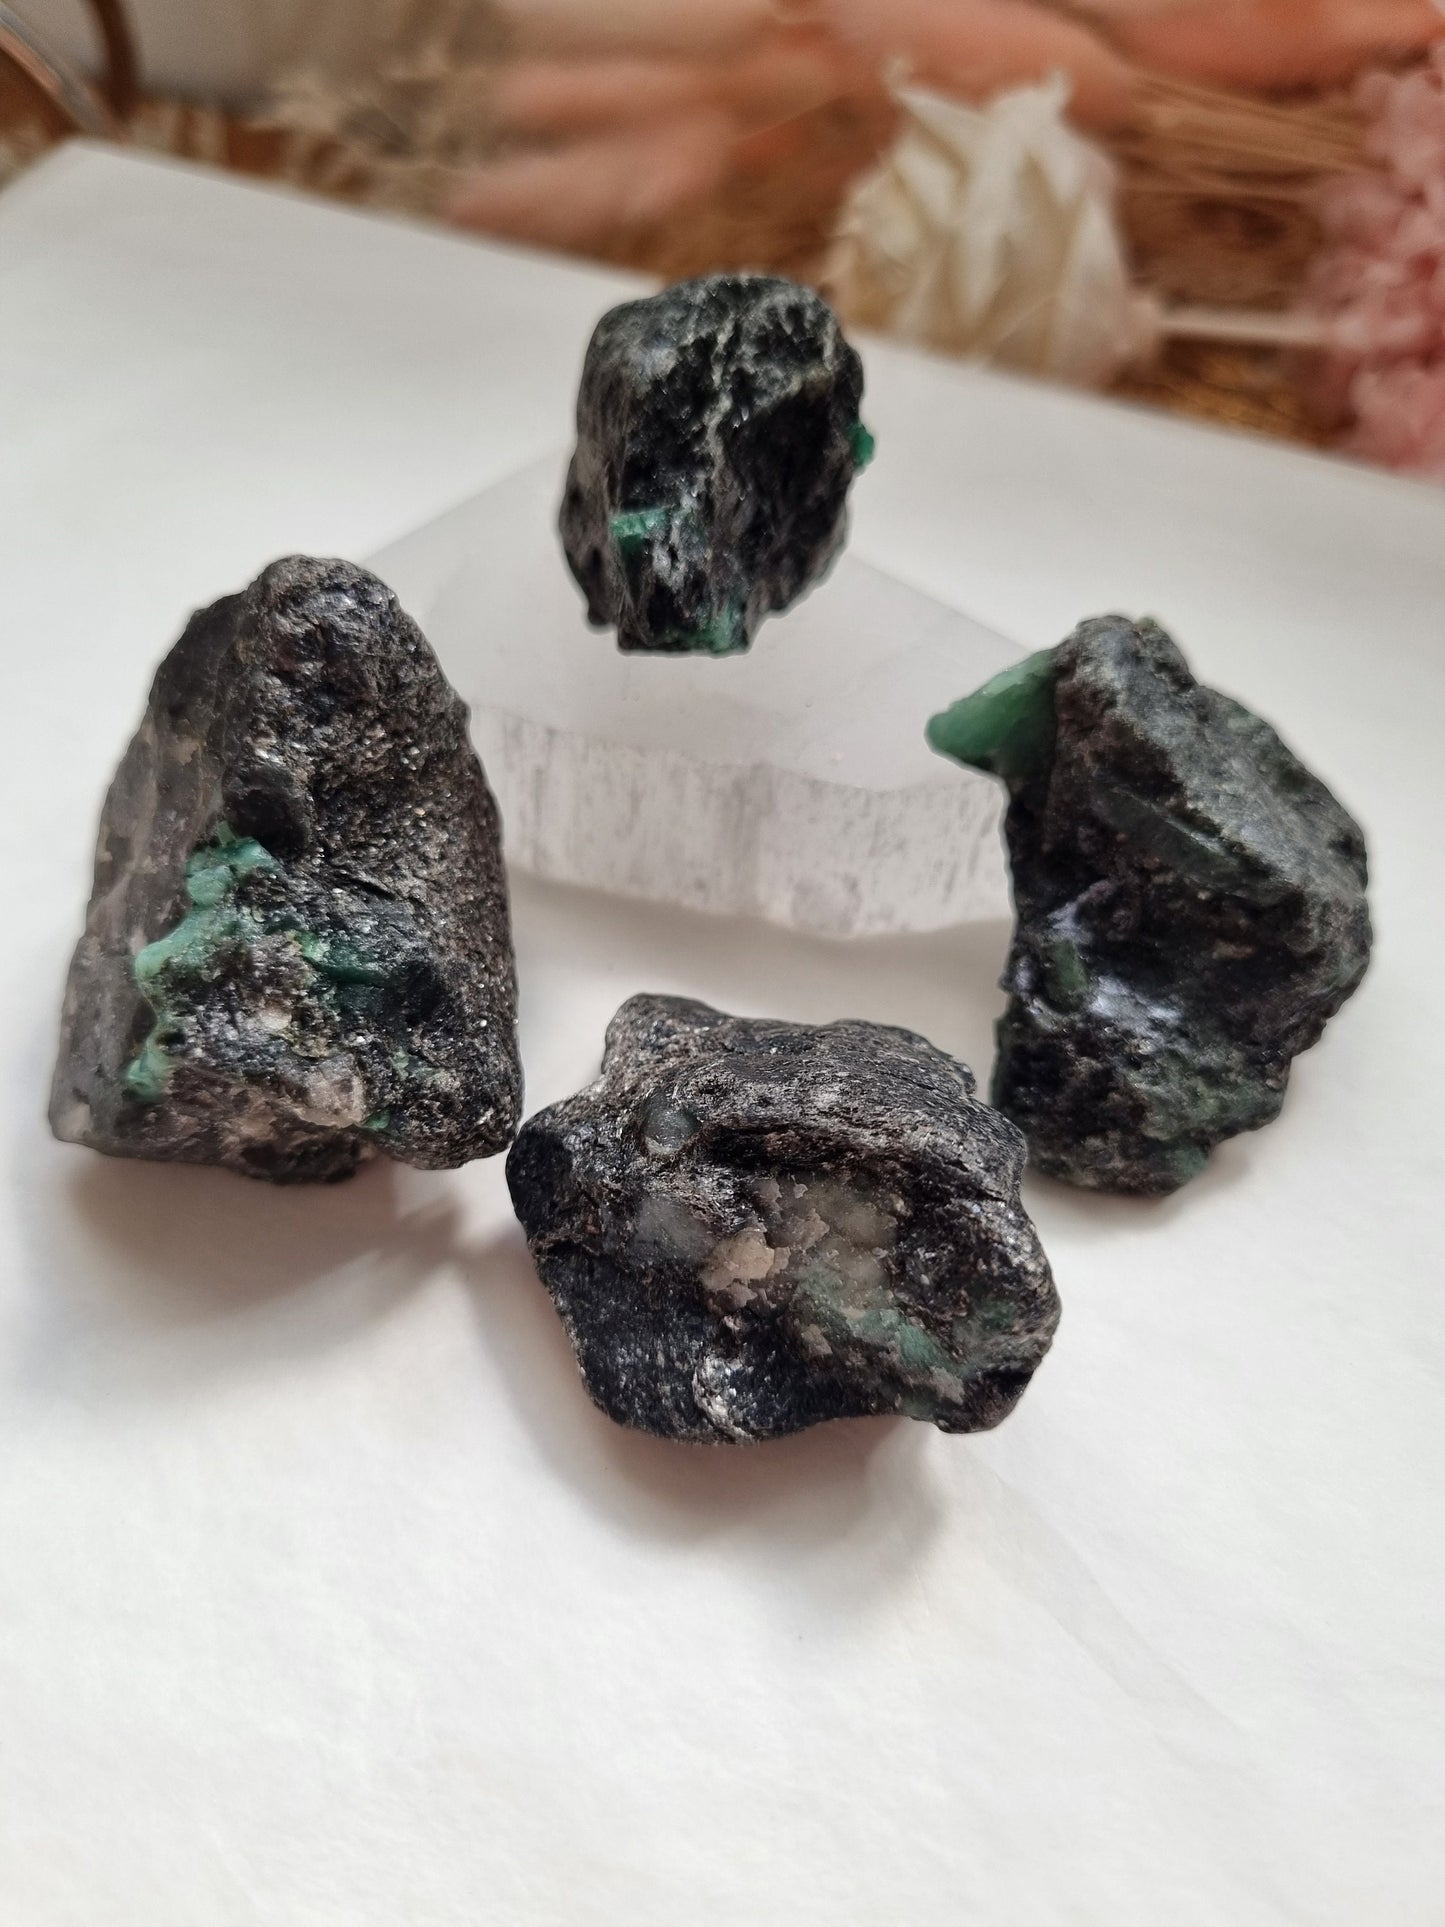 Raw Emerald chunk in matrix